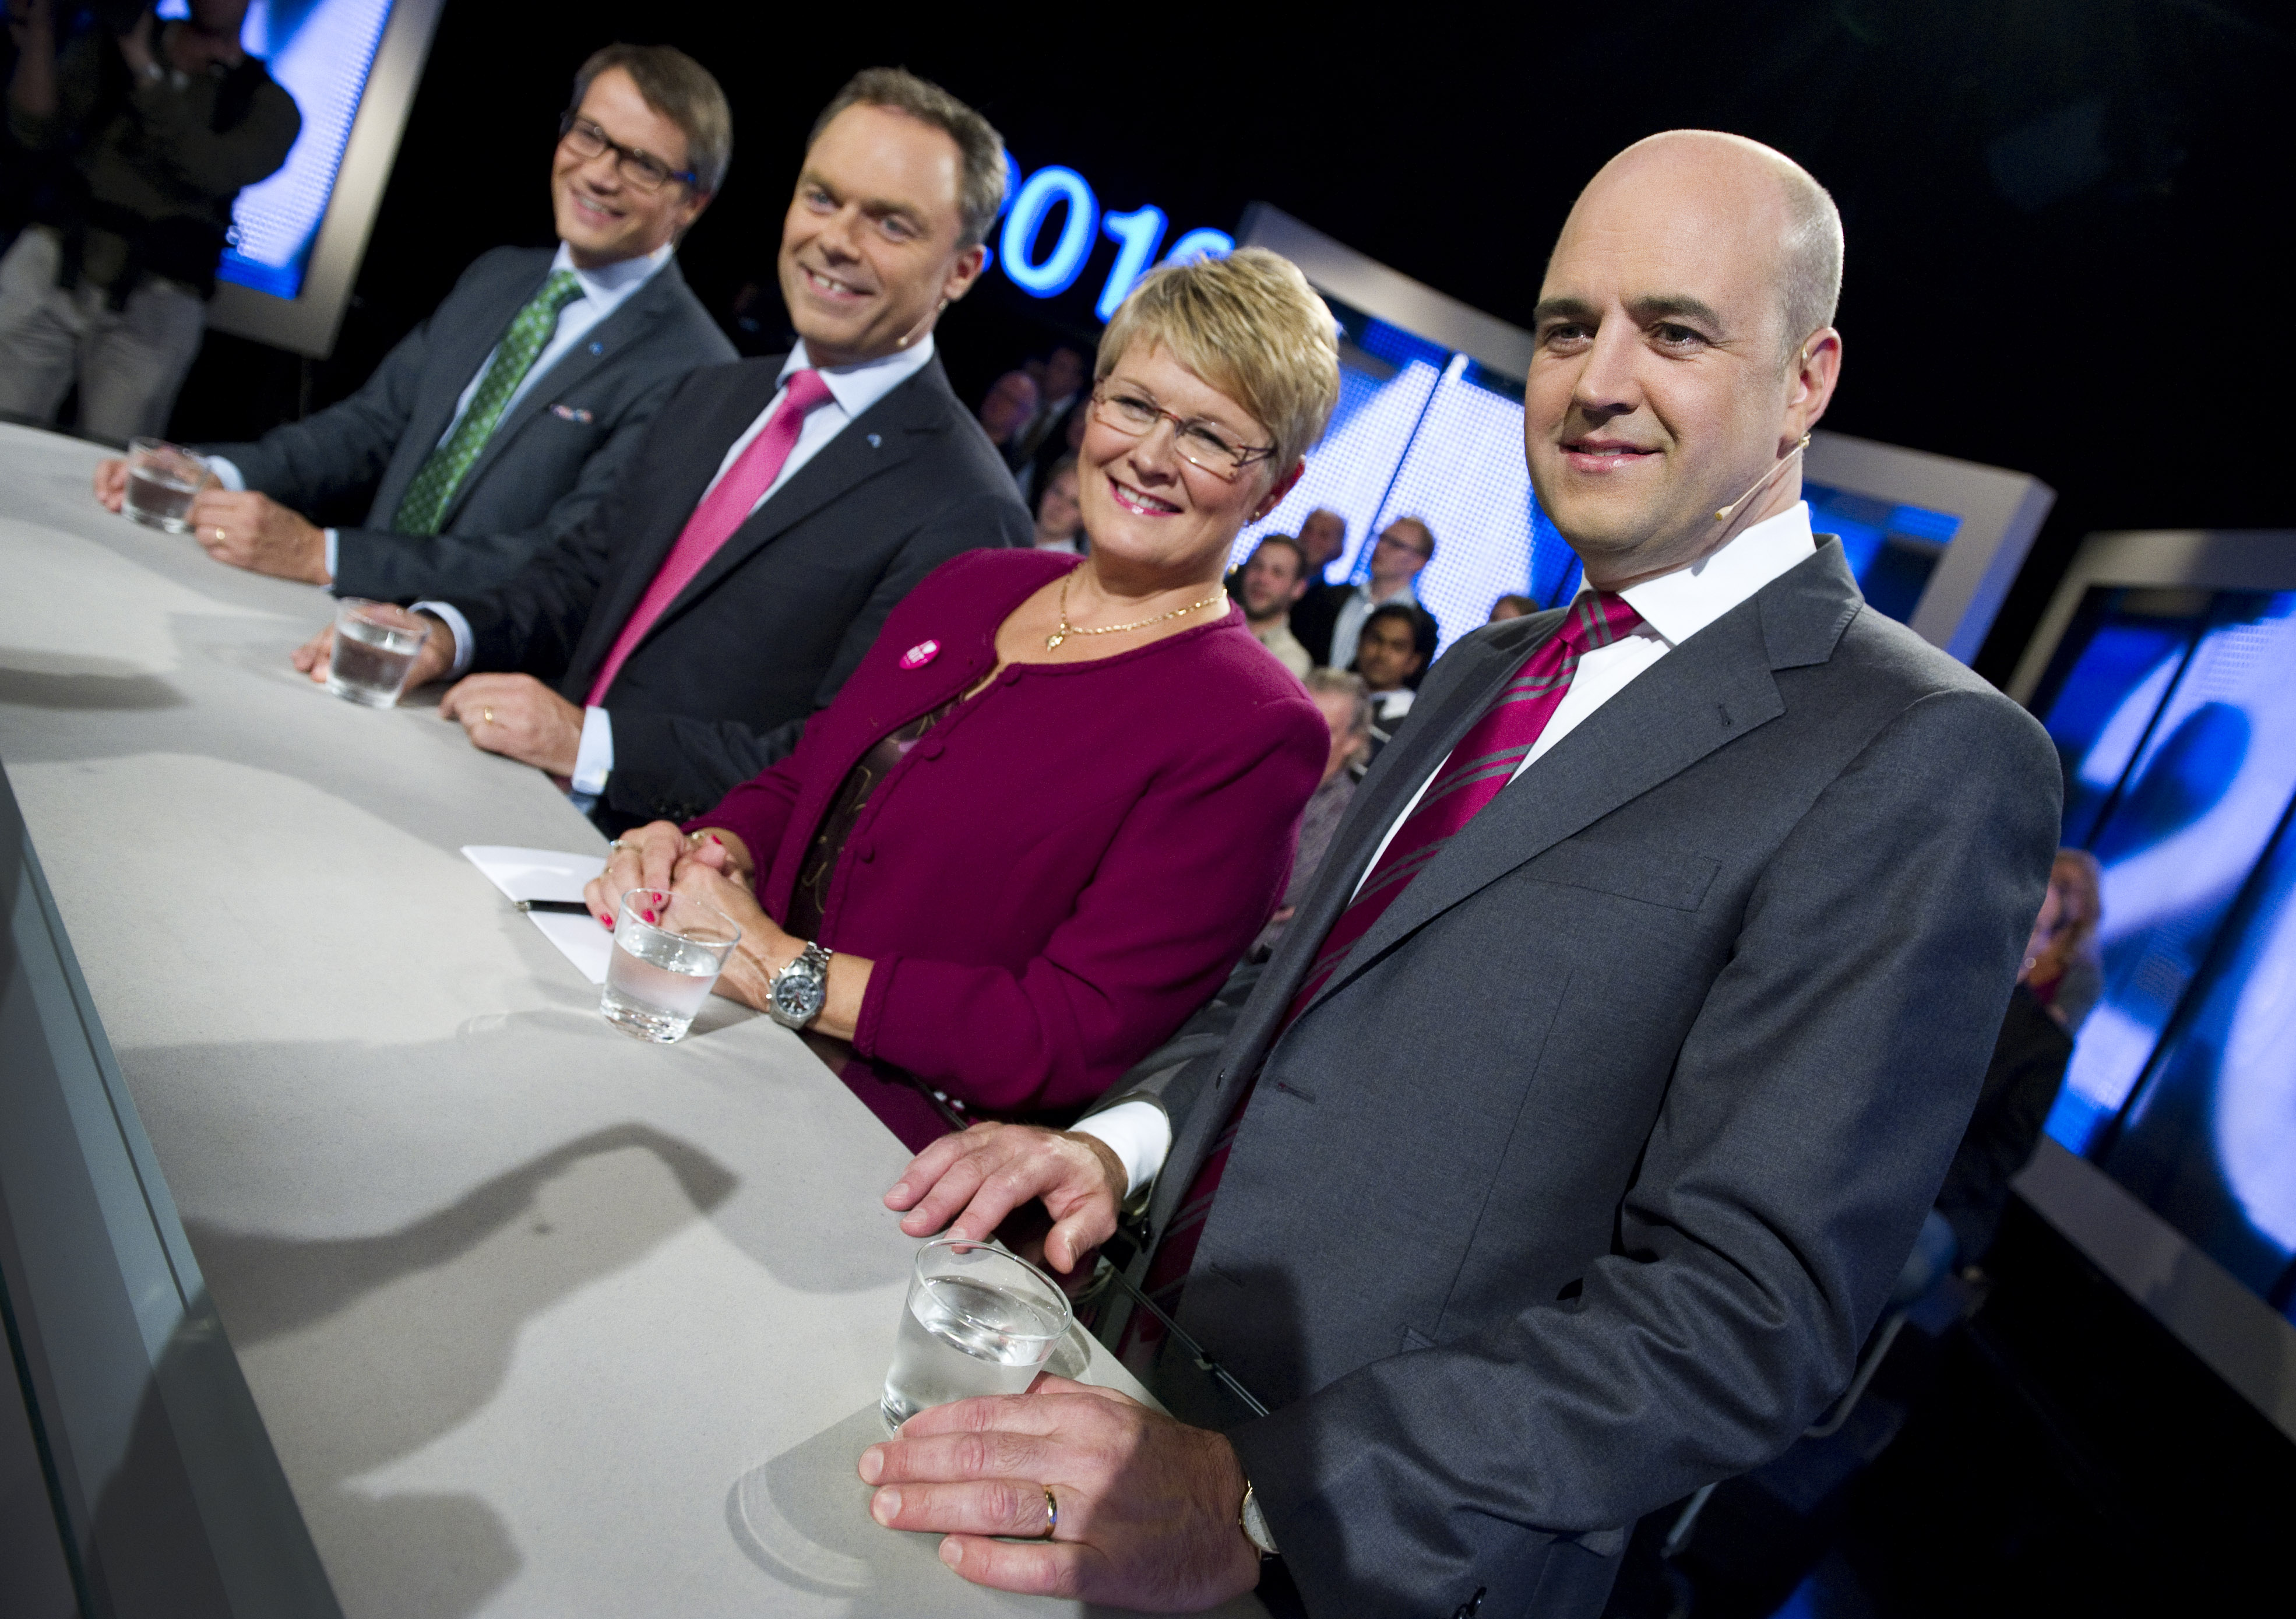 Fredrik Reinfeldt, Jan Björklund, Riksdagsvalet 2010, Jenny Östergren, Partiledarutfrågning, Malou von Sivers, TV4, Alliansen